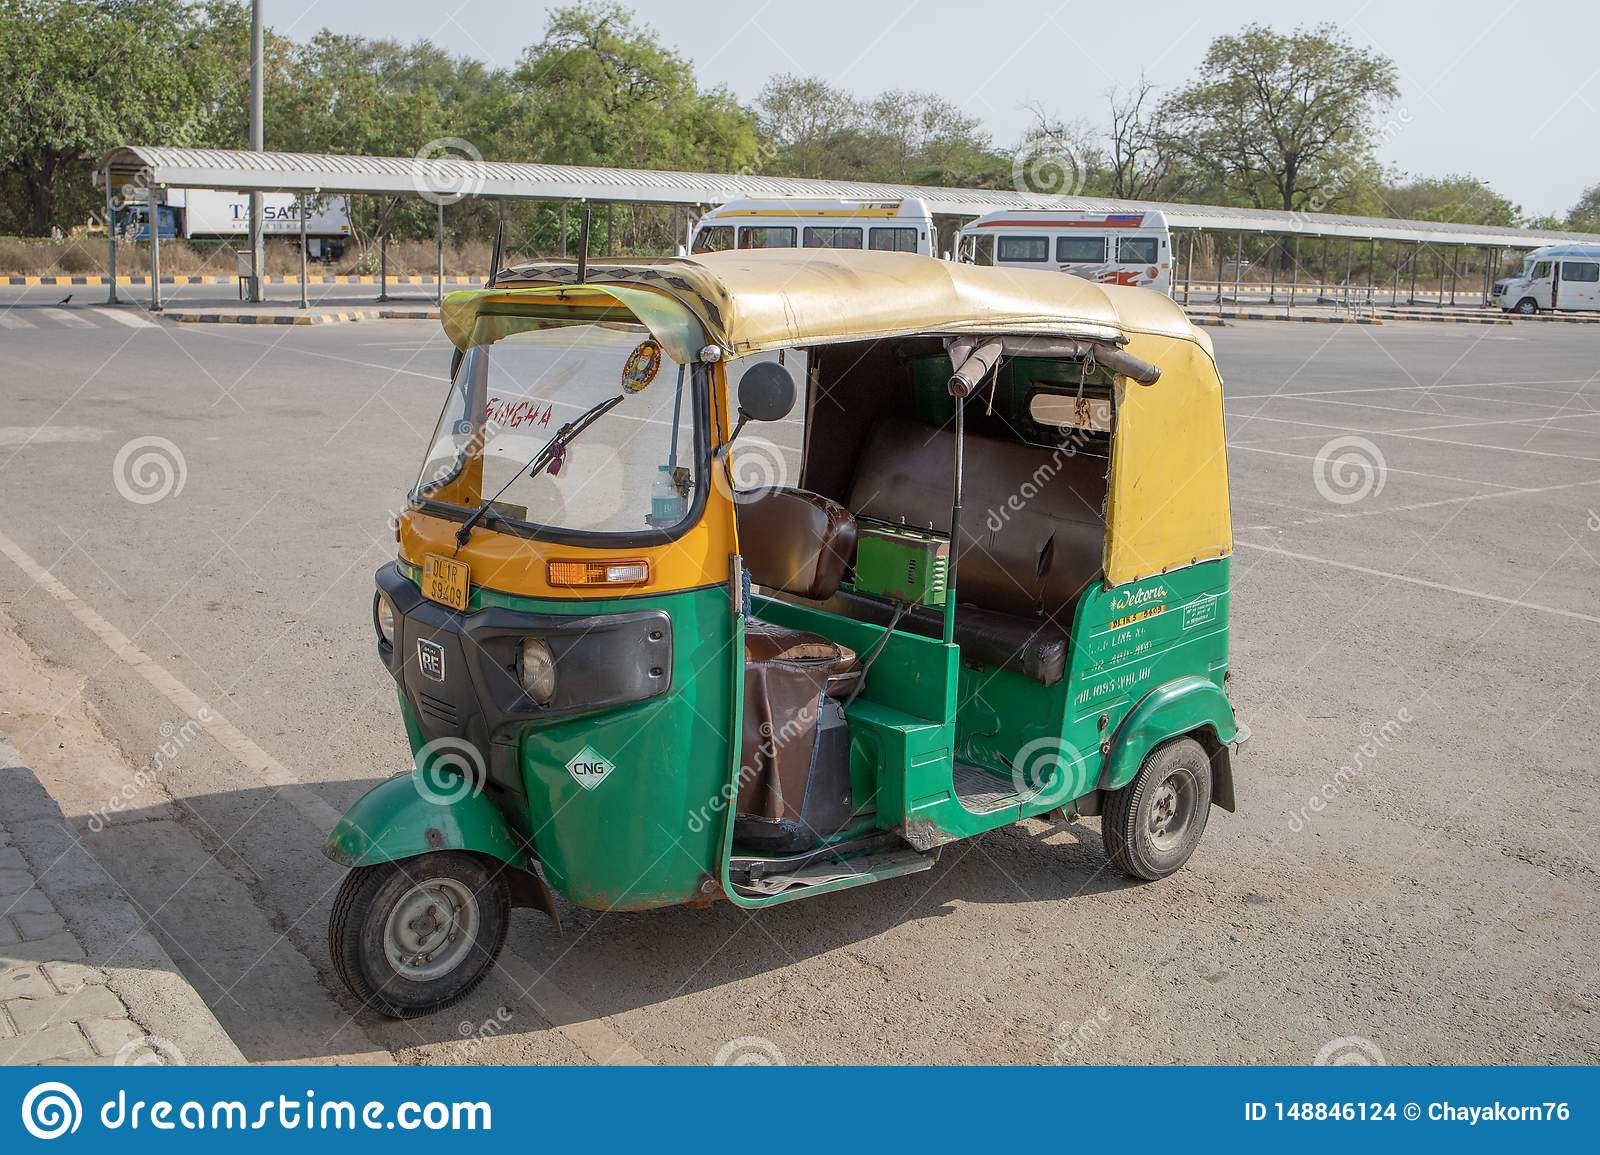 QSD Cheap Bajaj Three Wheeler Auto Rickshaw Price for Bangladesh | Qiangsheng Electric Tricycle Factory, E rickshaw,Auto rickshaw, battery  rickshaw suppliers, Manufacturer